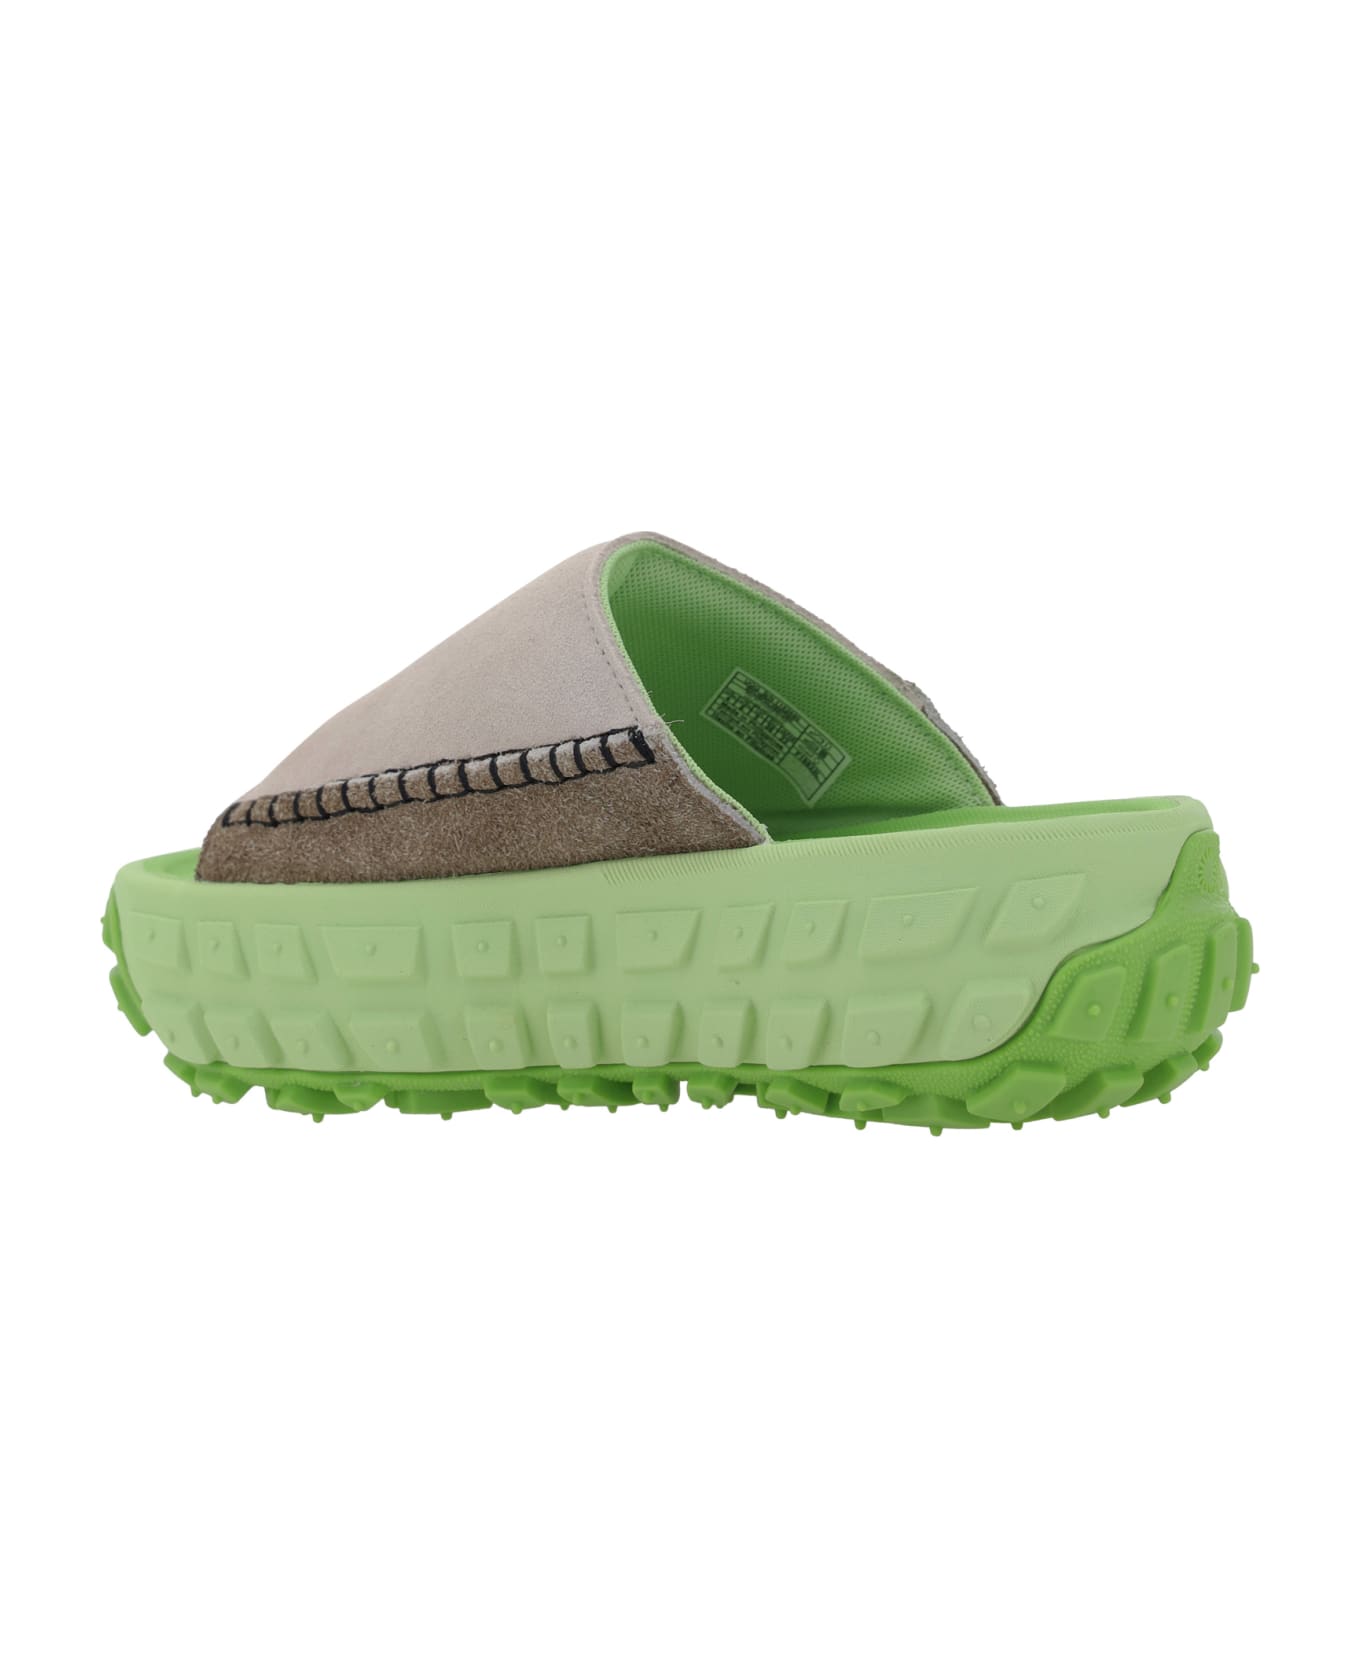 UGG Venture Daze Sandals - Ceramic / Caterpillar